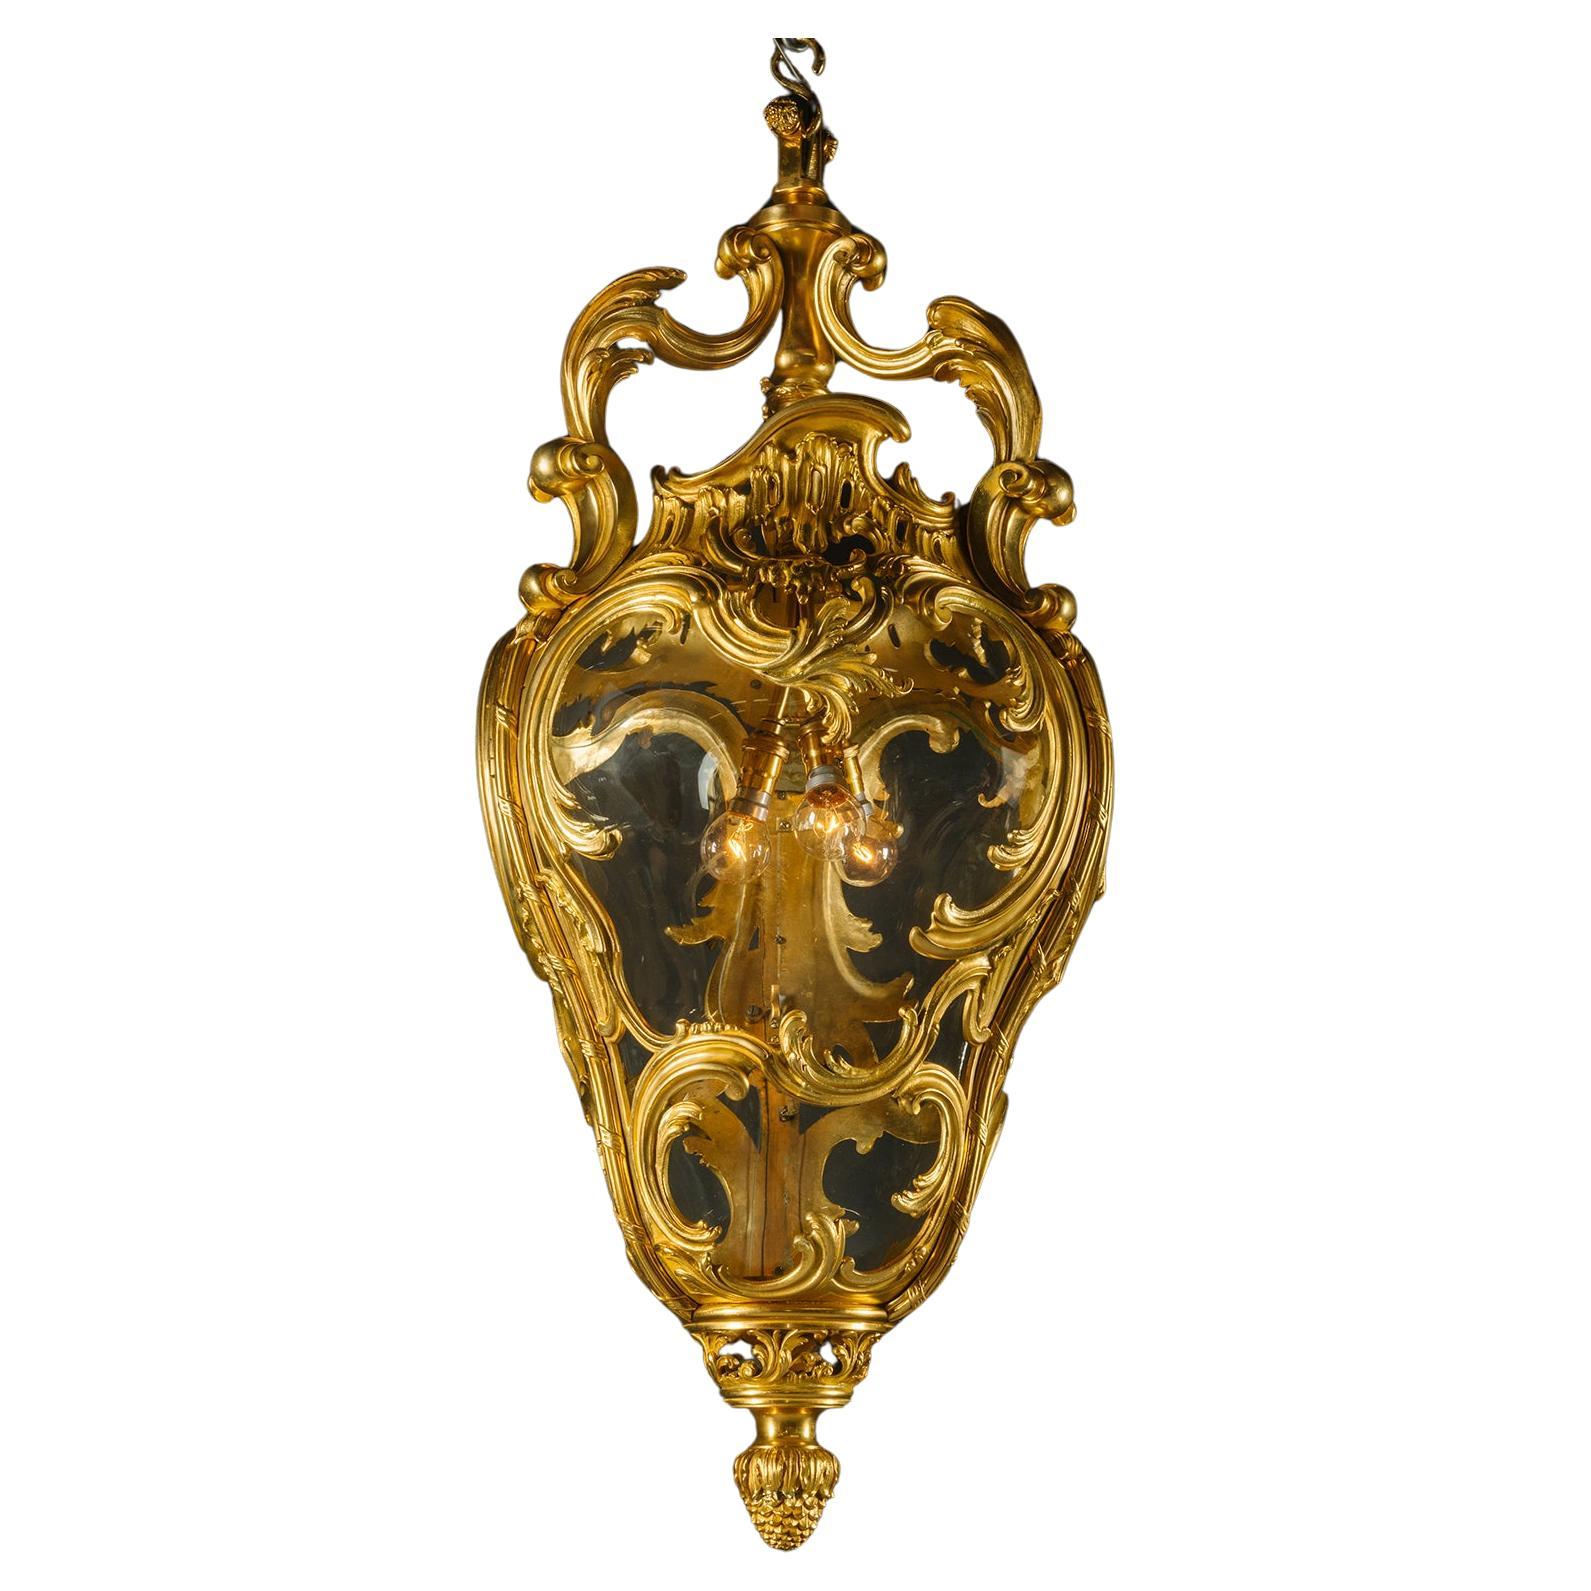  Lanterne d'entrée de style rococo en bronze doré